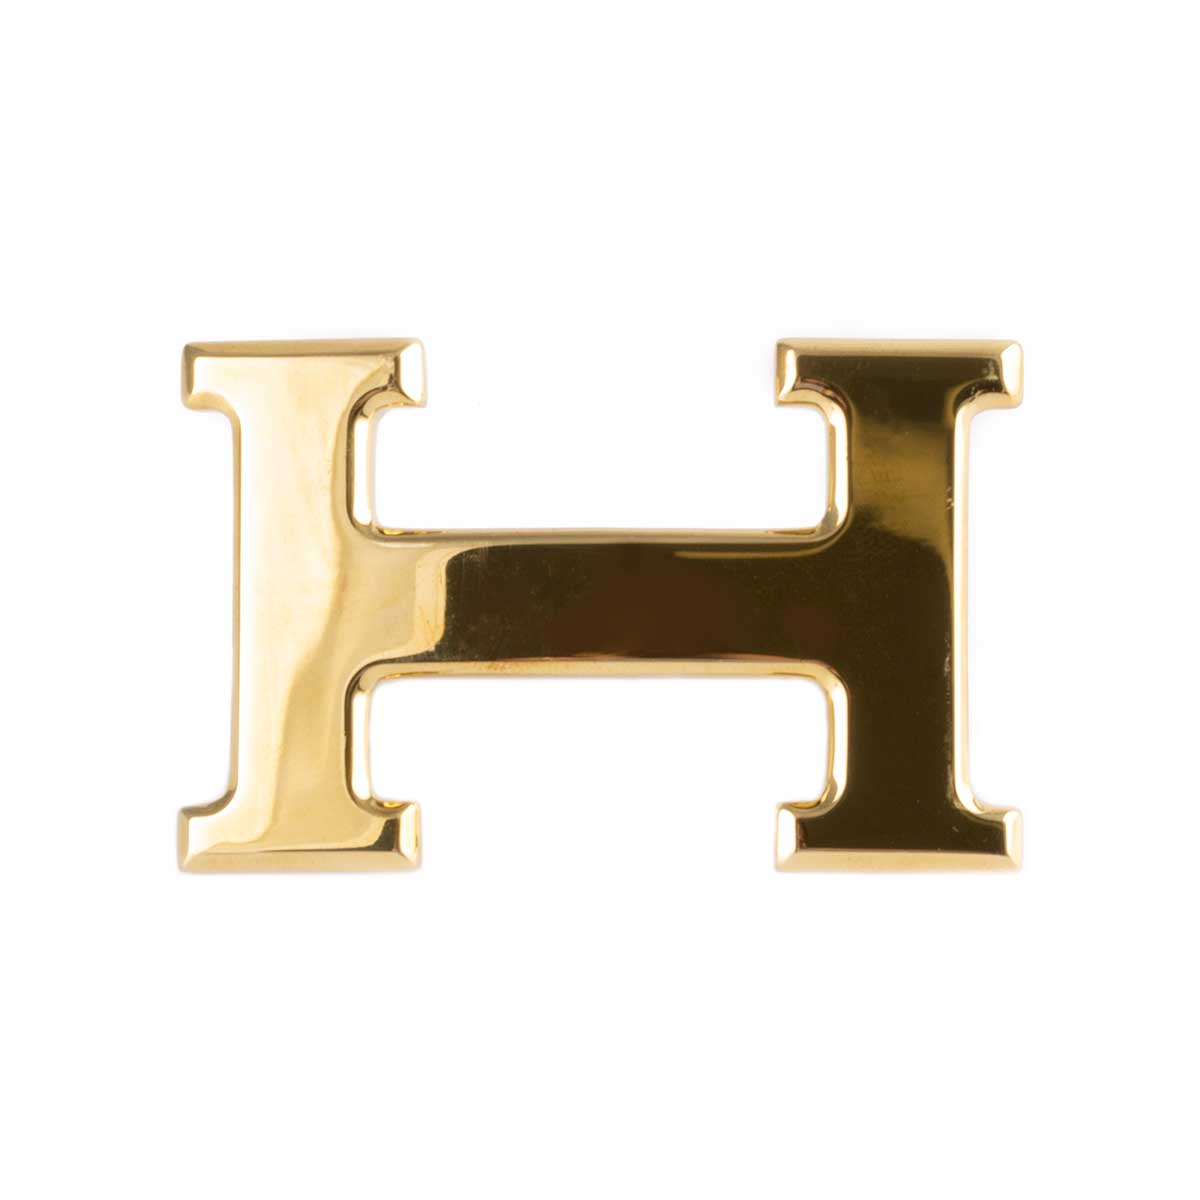 Classic leather belt with polished golden "H" buckle - Alligator (black, navy blue, blue)